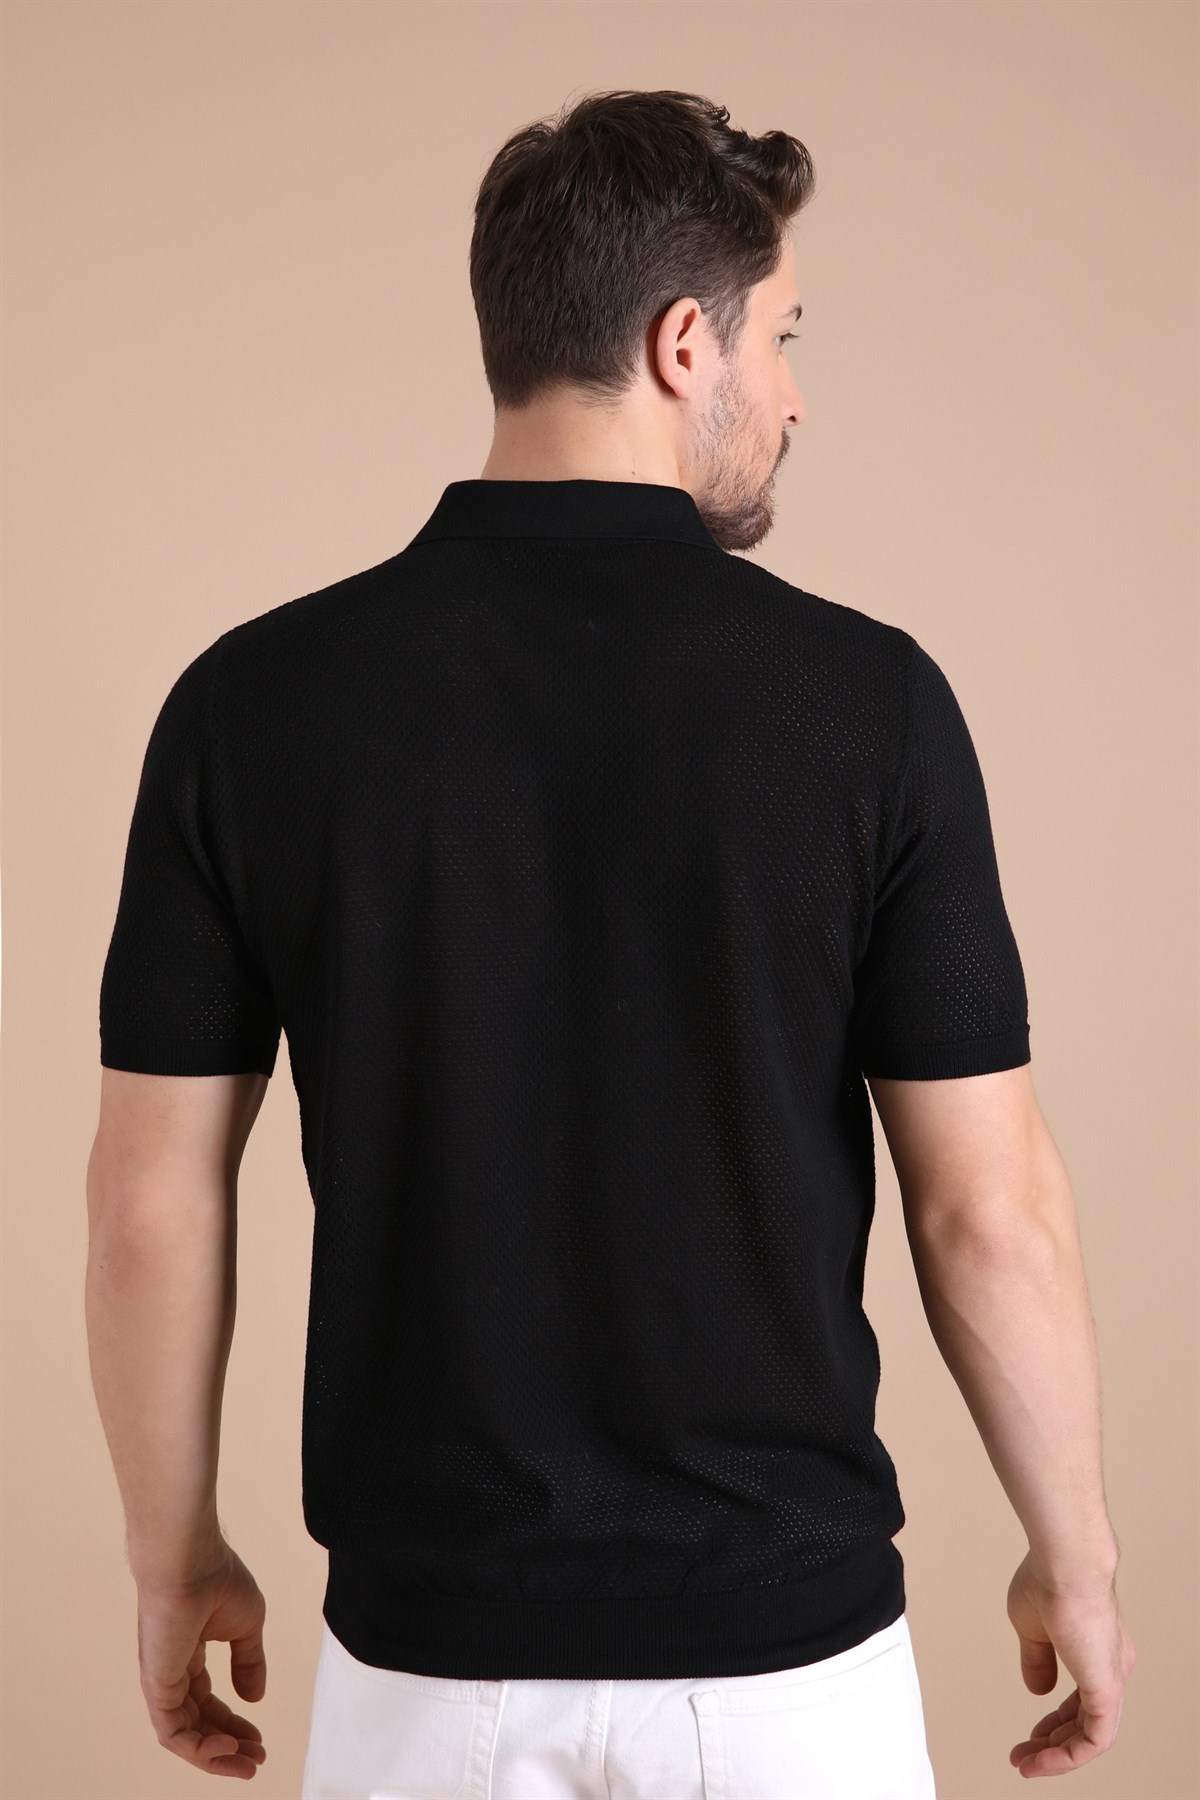 Ferraro Siyah Polo Yaka Düğmeli Erkek Pamuk Triko T-Shirt | Erkek Giyim |  modaferraro.com.tr